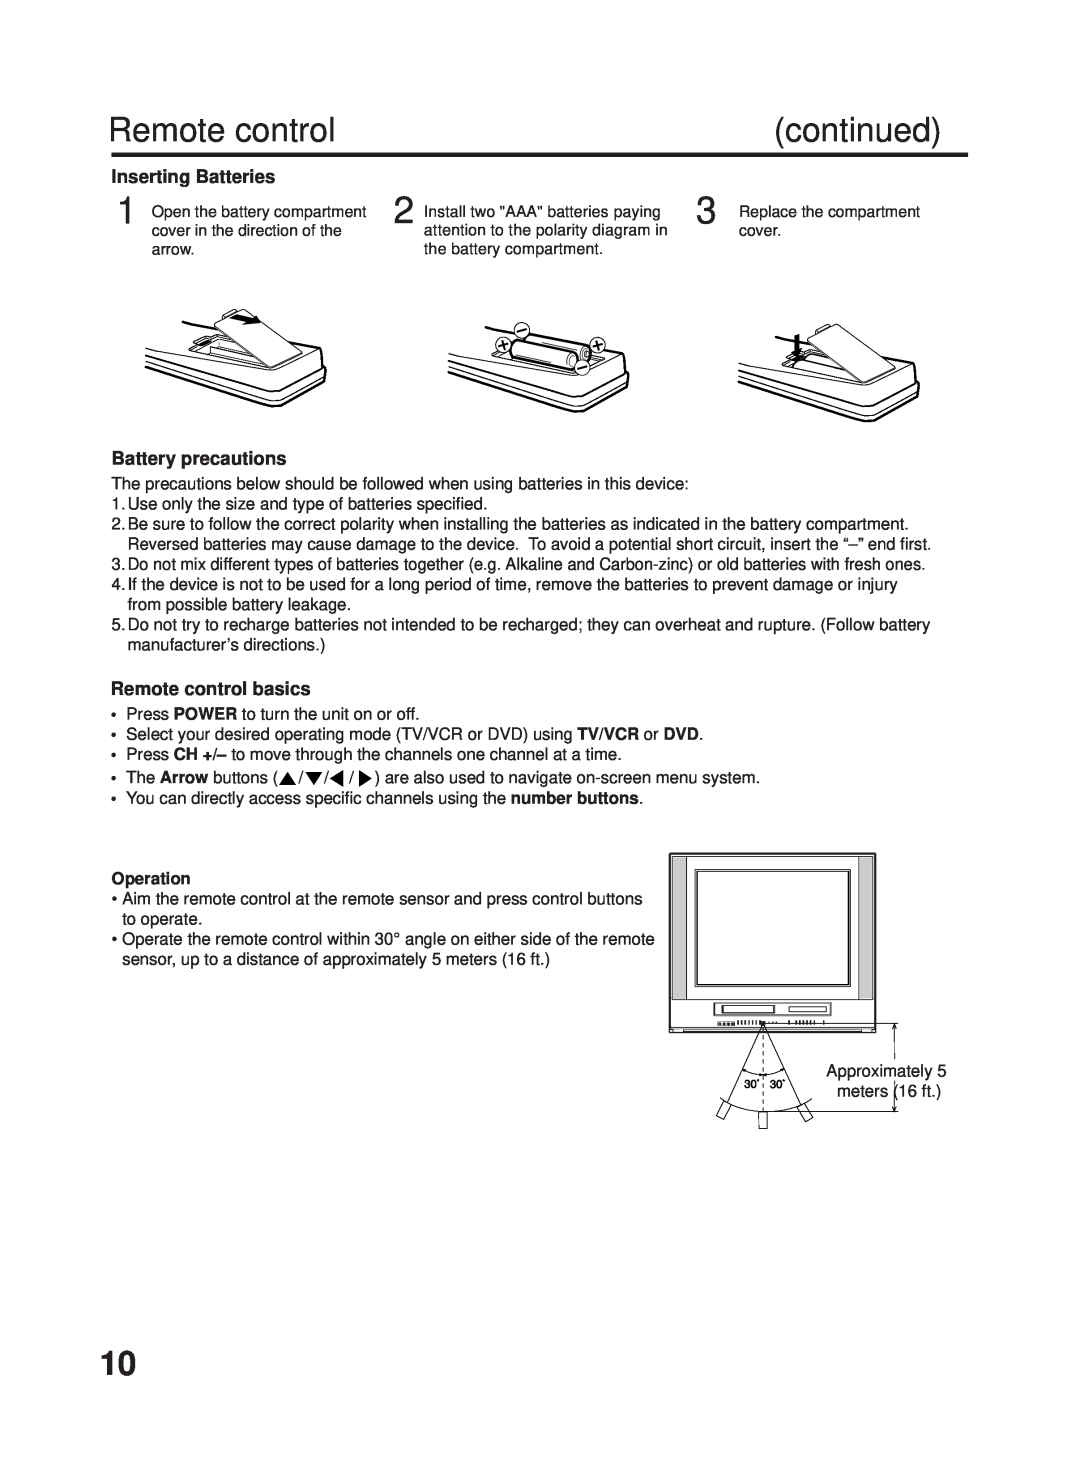 RCA 27F500TDV manual continued, Inserting Batteries, Battery precautions, Remote control basics, Operation 